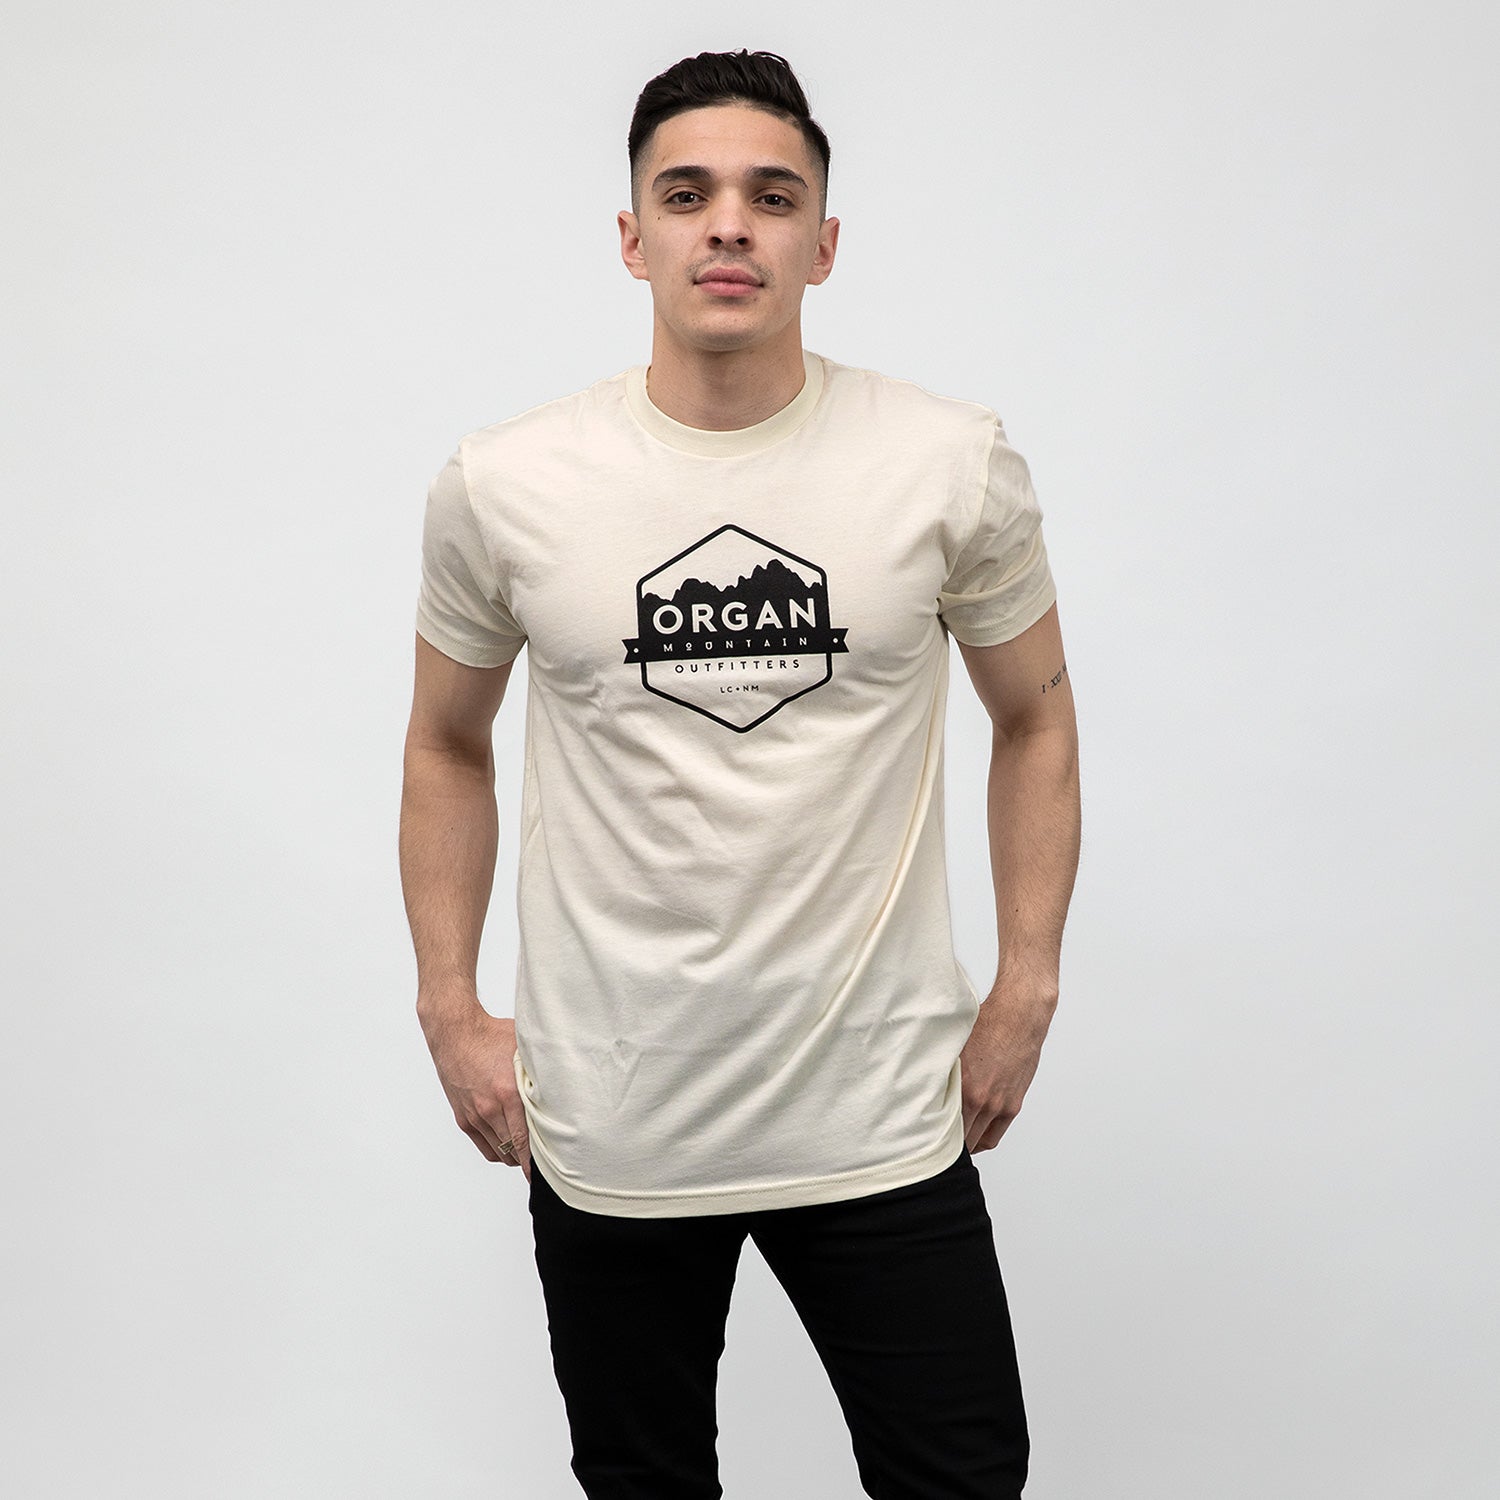 100% Cotton Classic Logo T-Shirt - Organ Mountain Outfitters